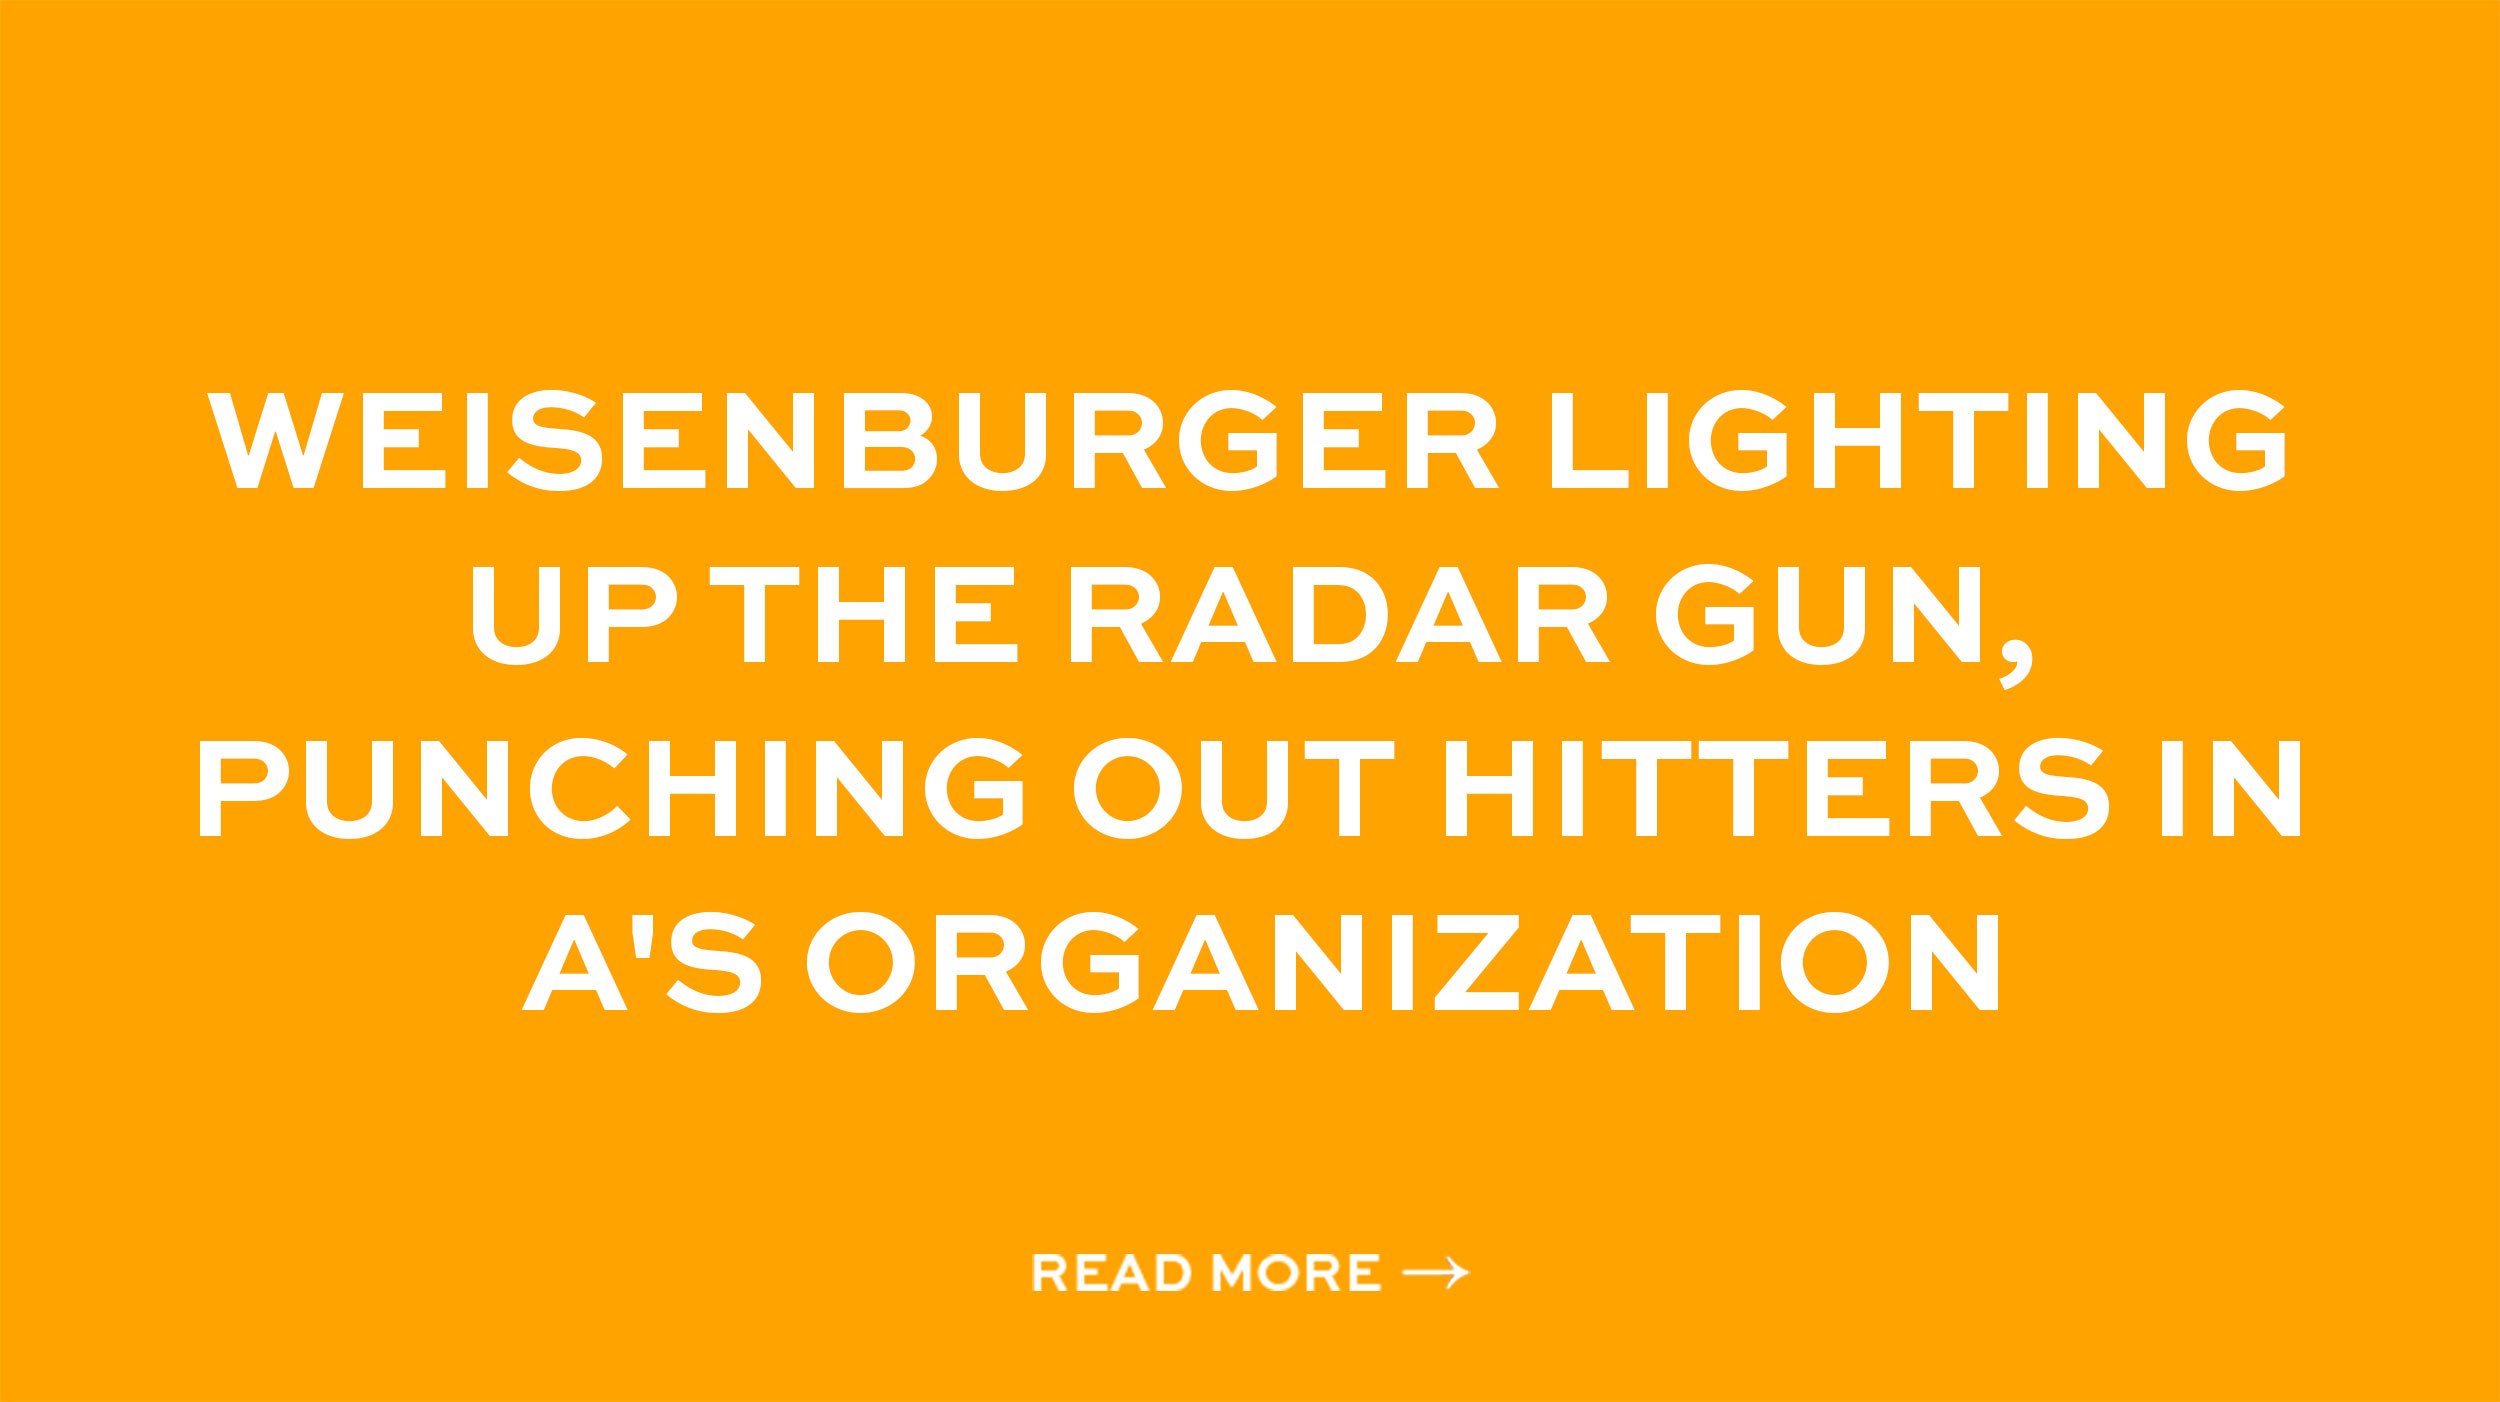 Weisenburger lighting up the radar gun, punching out hitters in A's organization